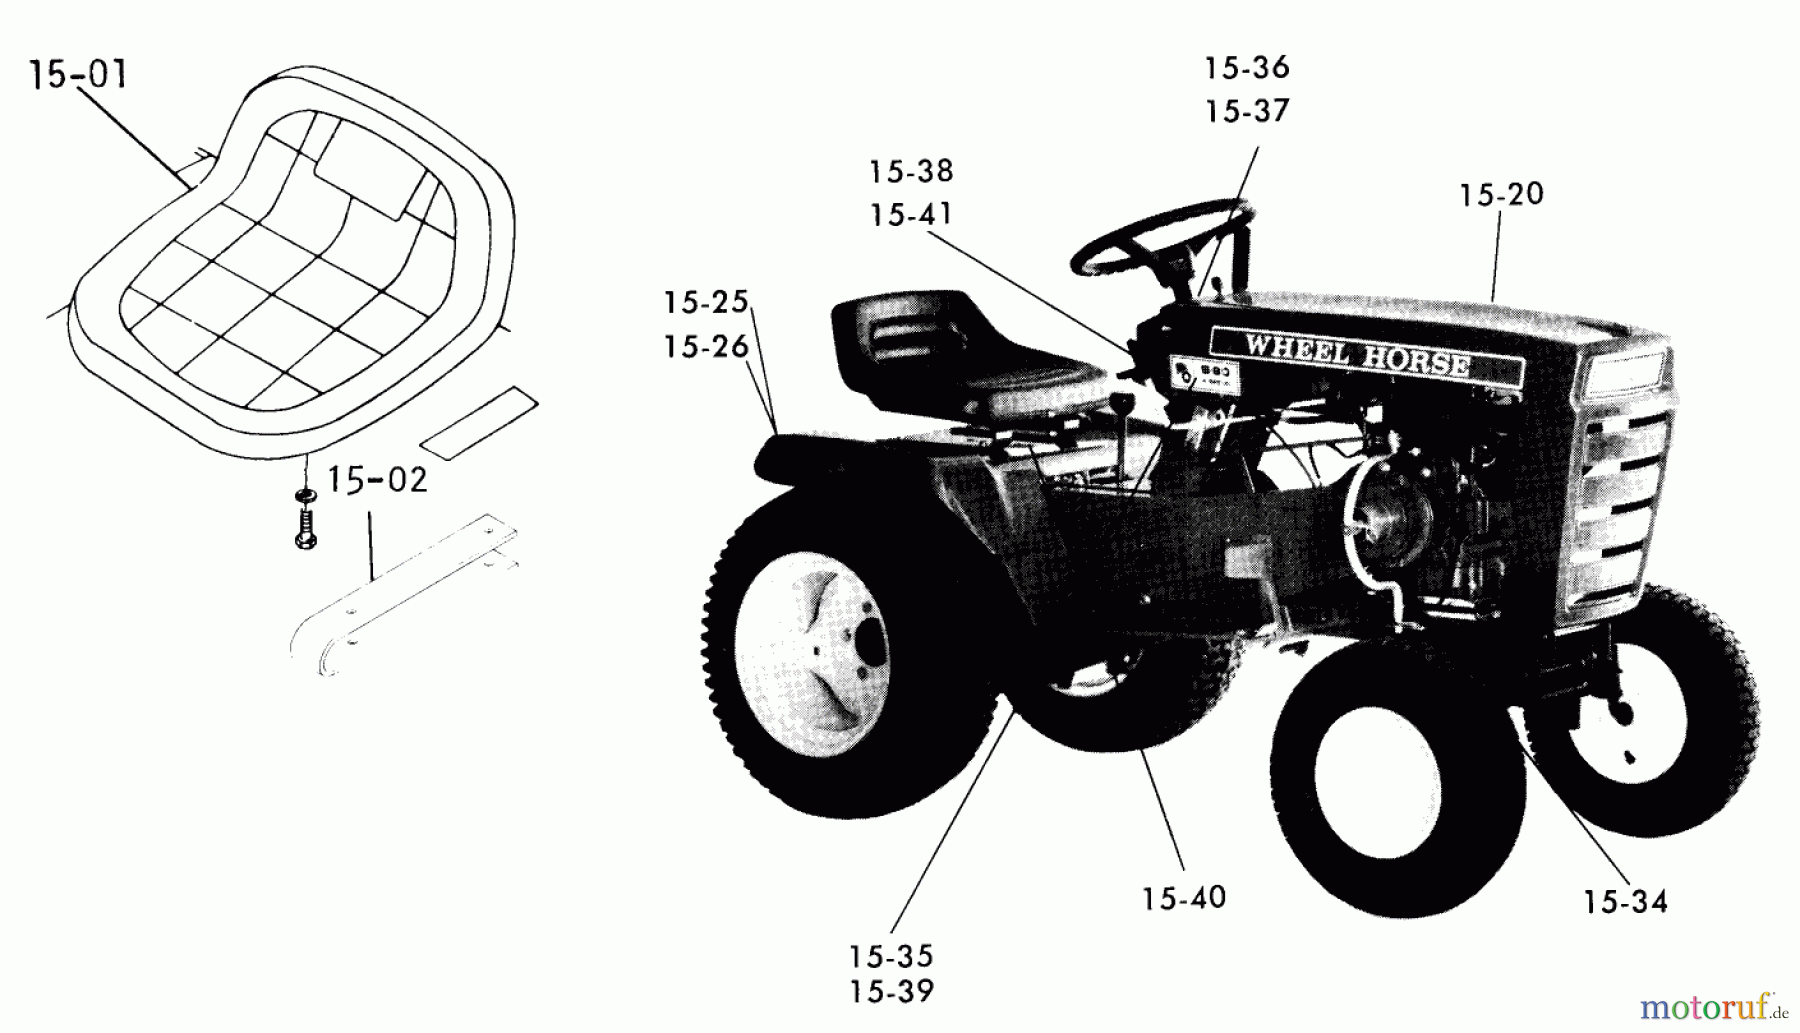  Toro Neu Mowers, Lawn & Garden Tractor Seite 1 1-0140 (B-80) - Toro B-80 4-Speed Tractor, 1974 15.000 SEATS, DECALS, MISC. TRIM (PLATE 15.1)